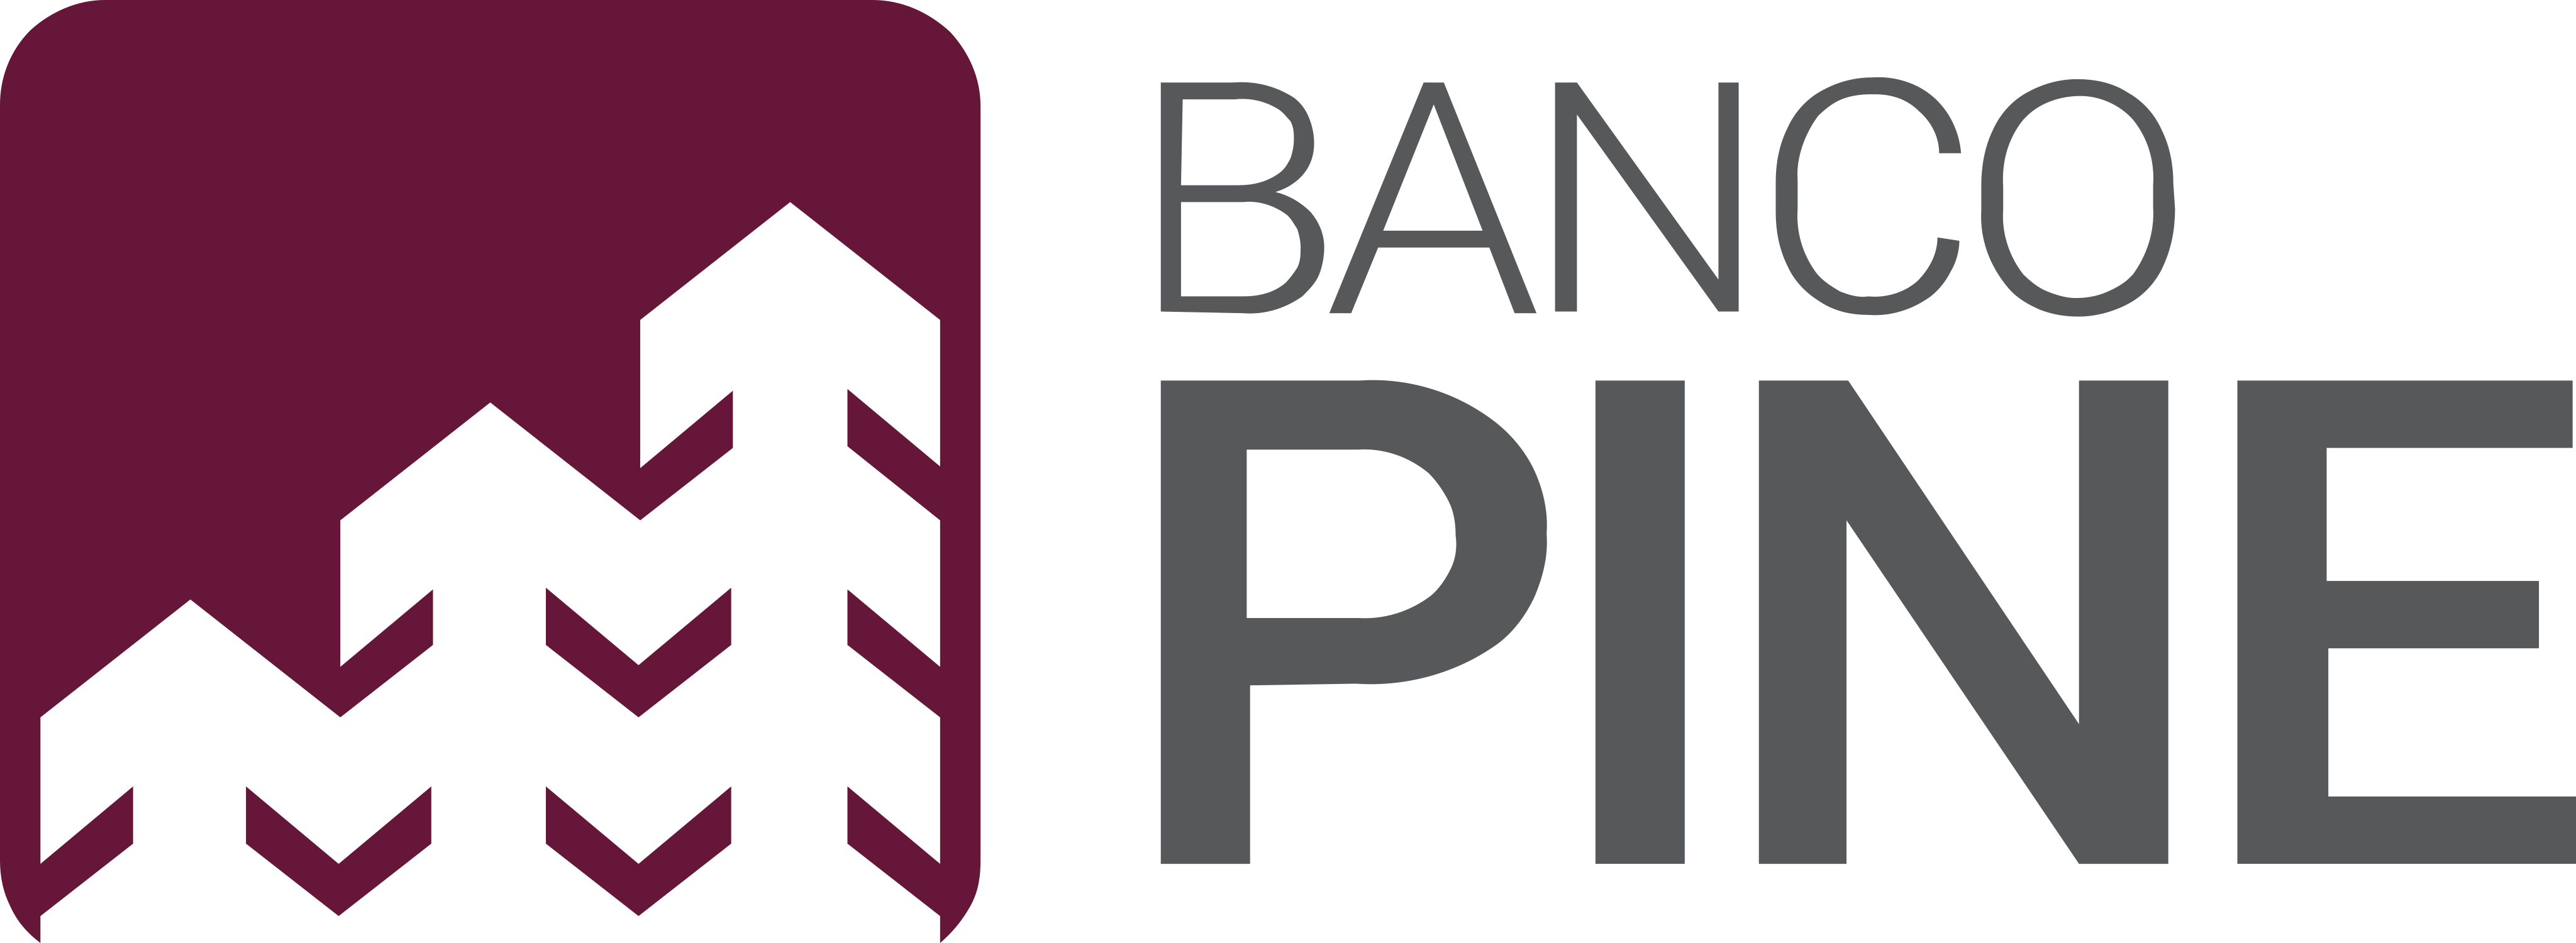 Banco Pine Logo.